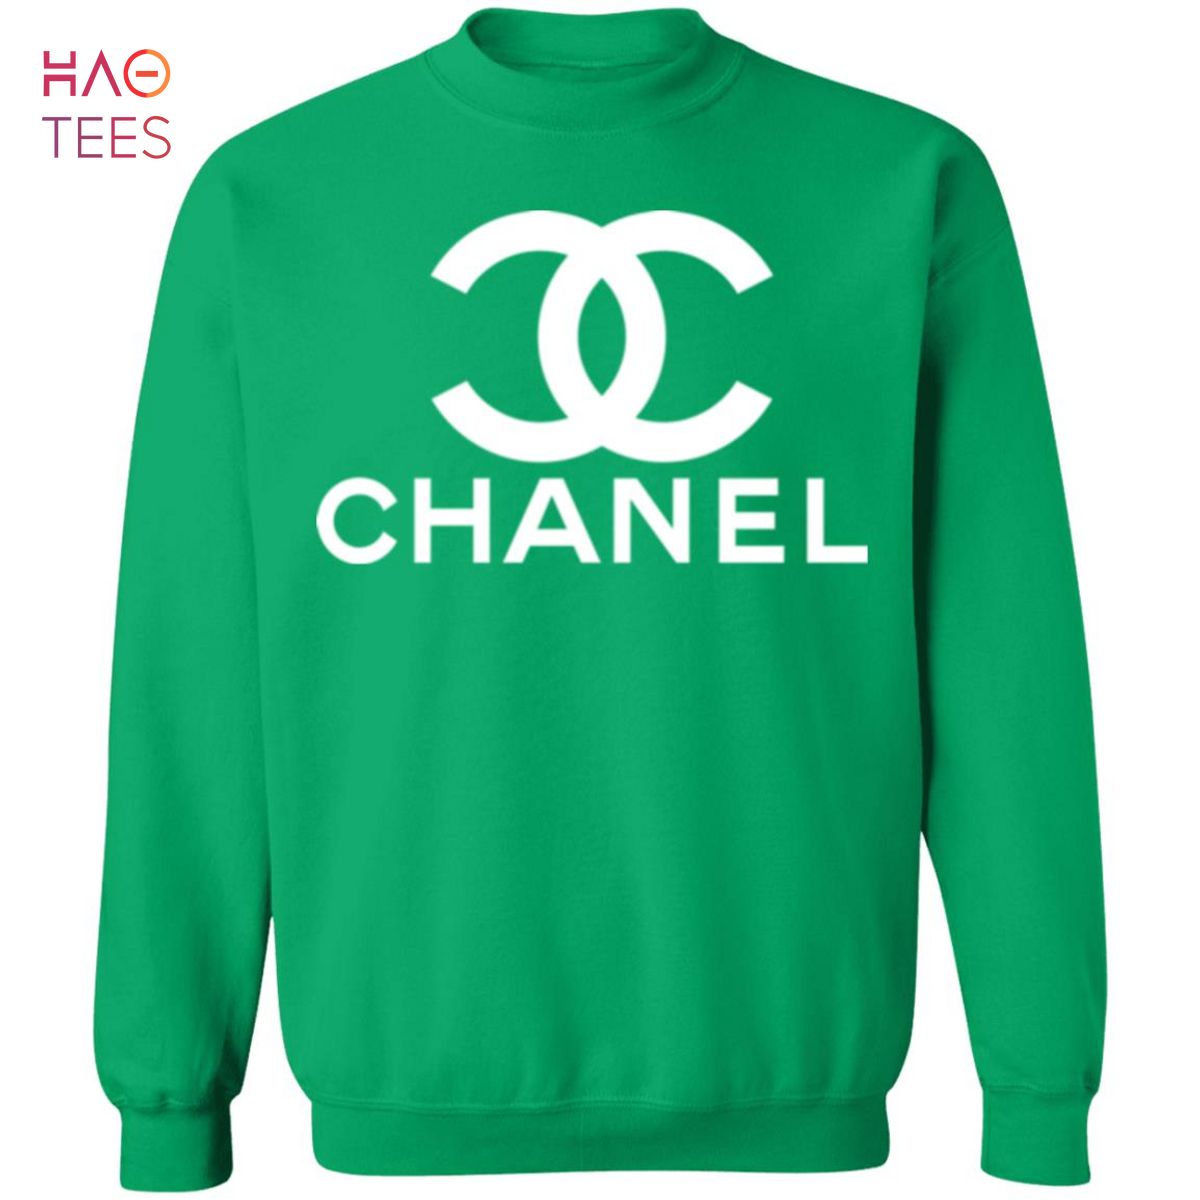 HOT Chanel Sweater Dark